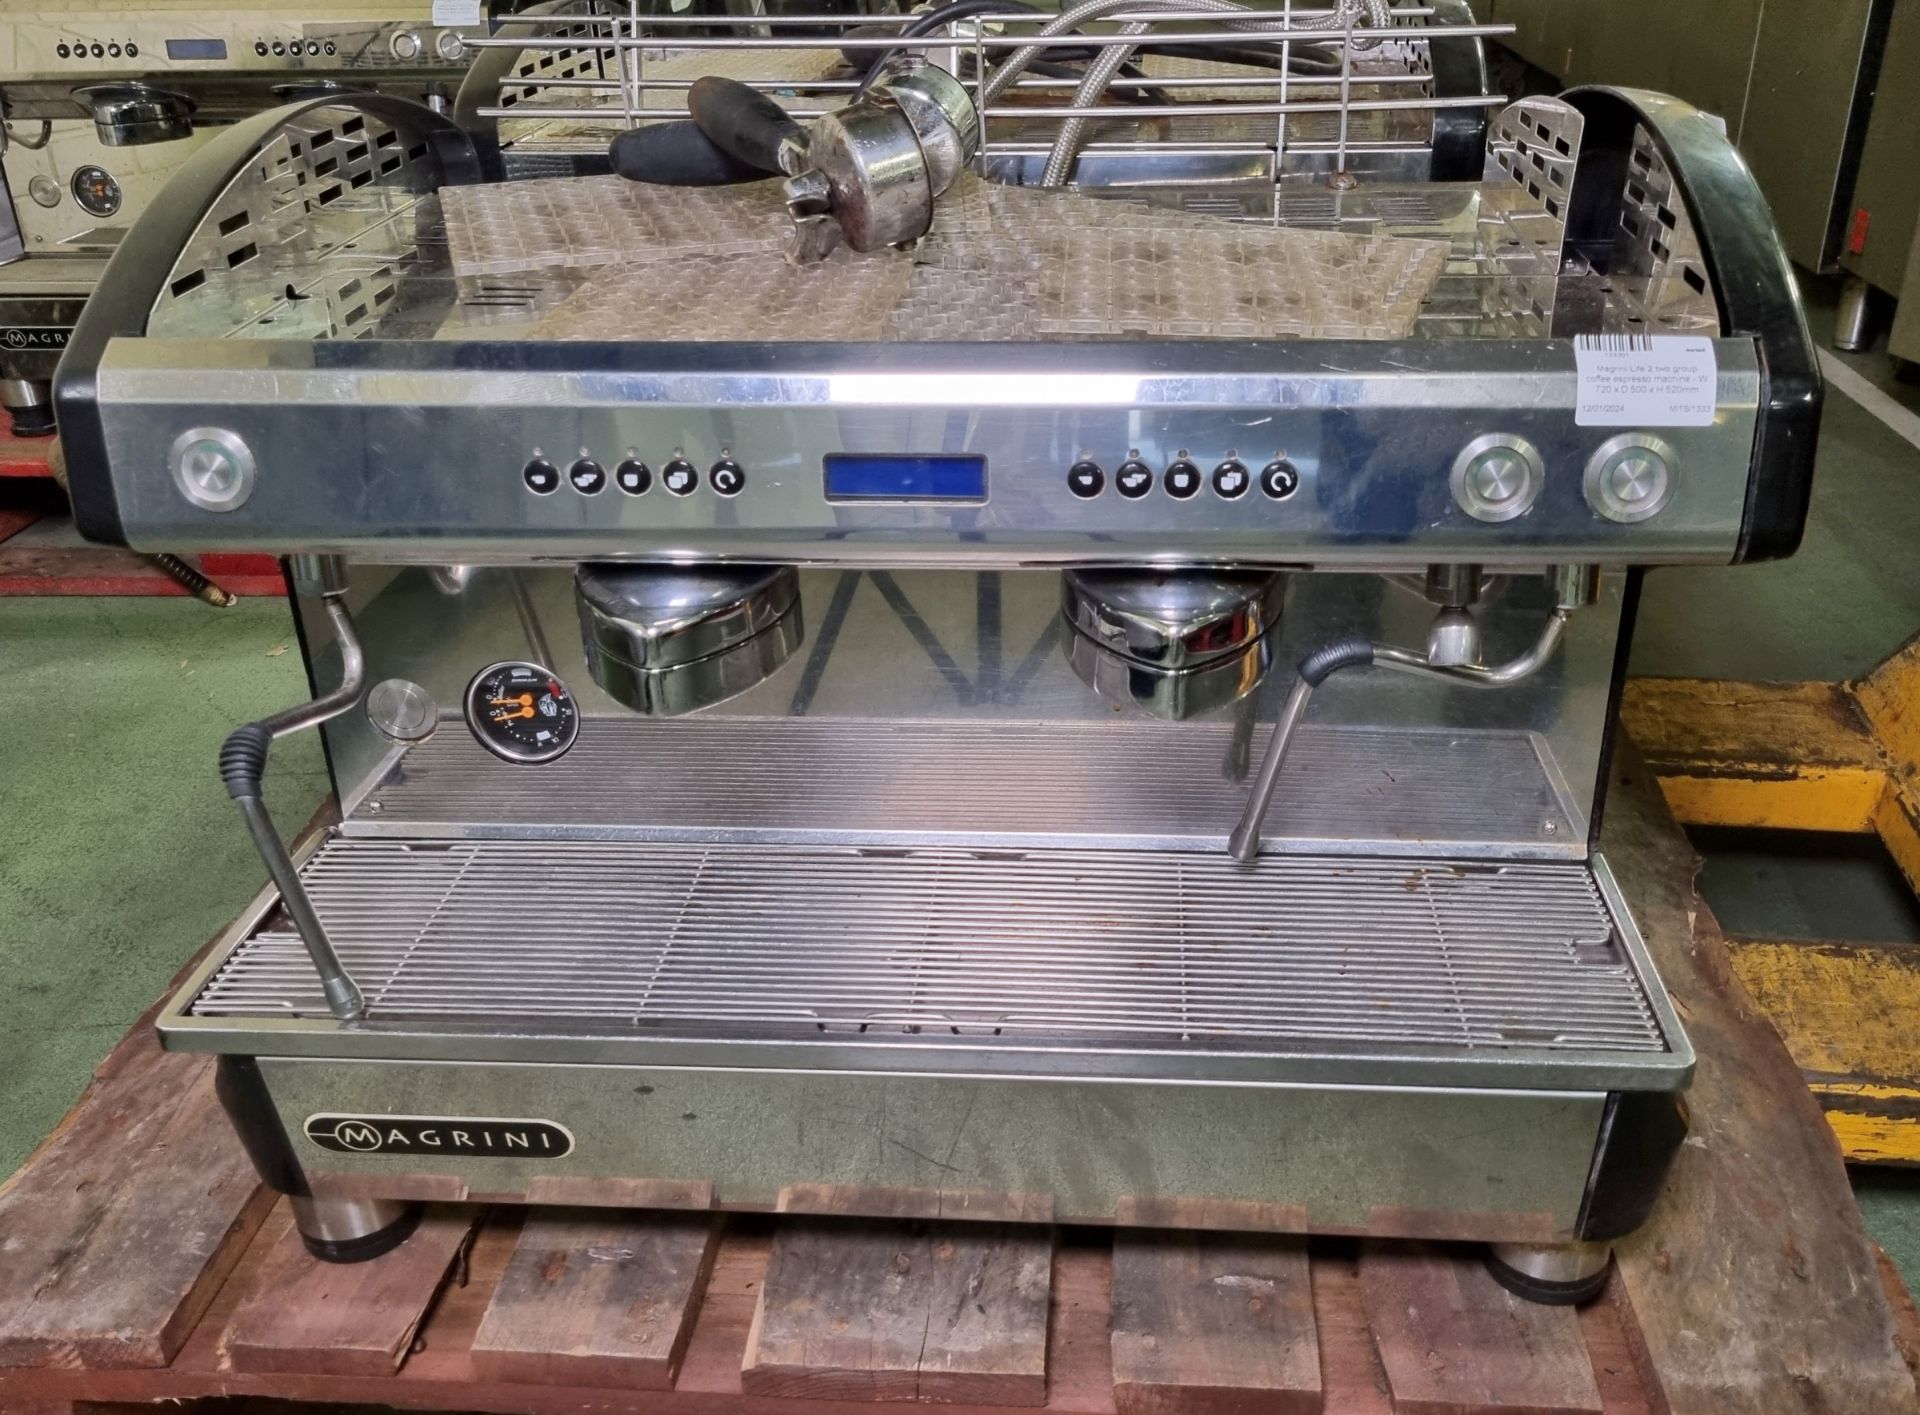 Magrini Life 2 two group coffee espresso machine - W 720 x D 500 x H 520 mm